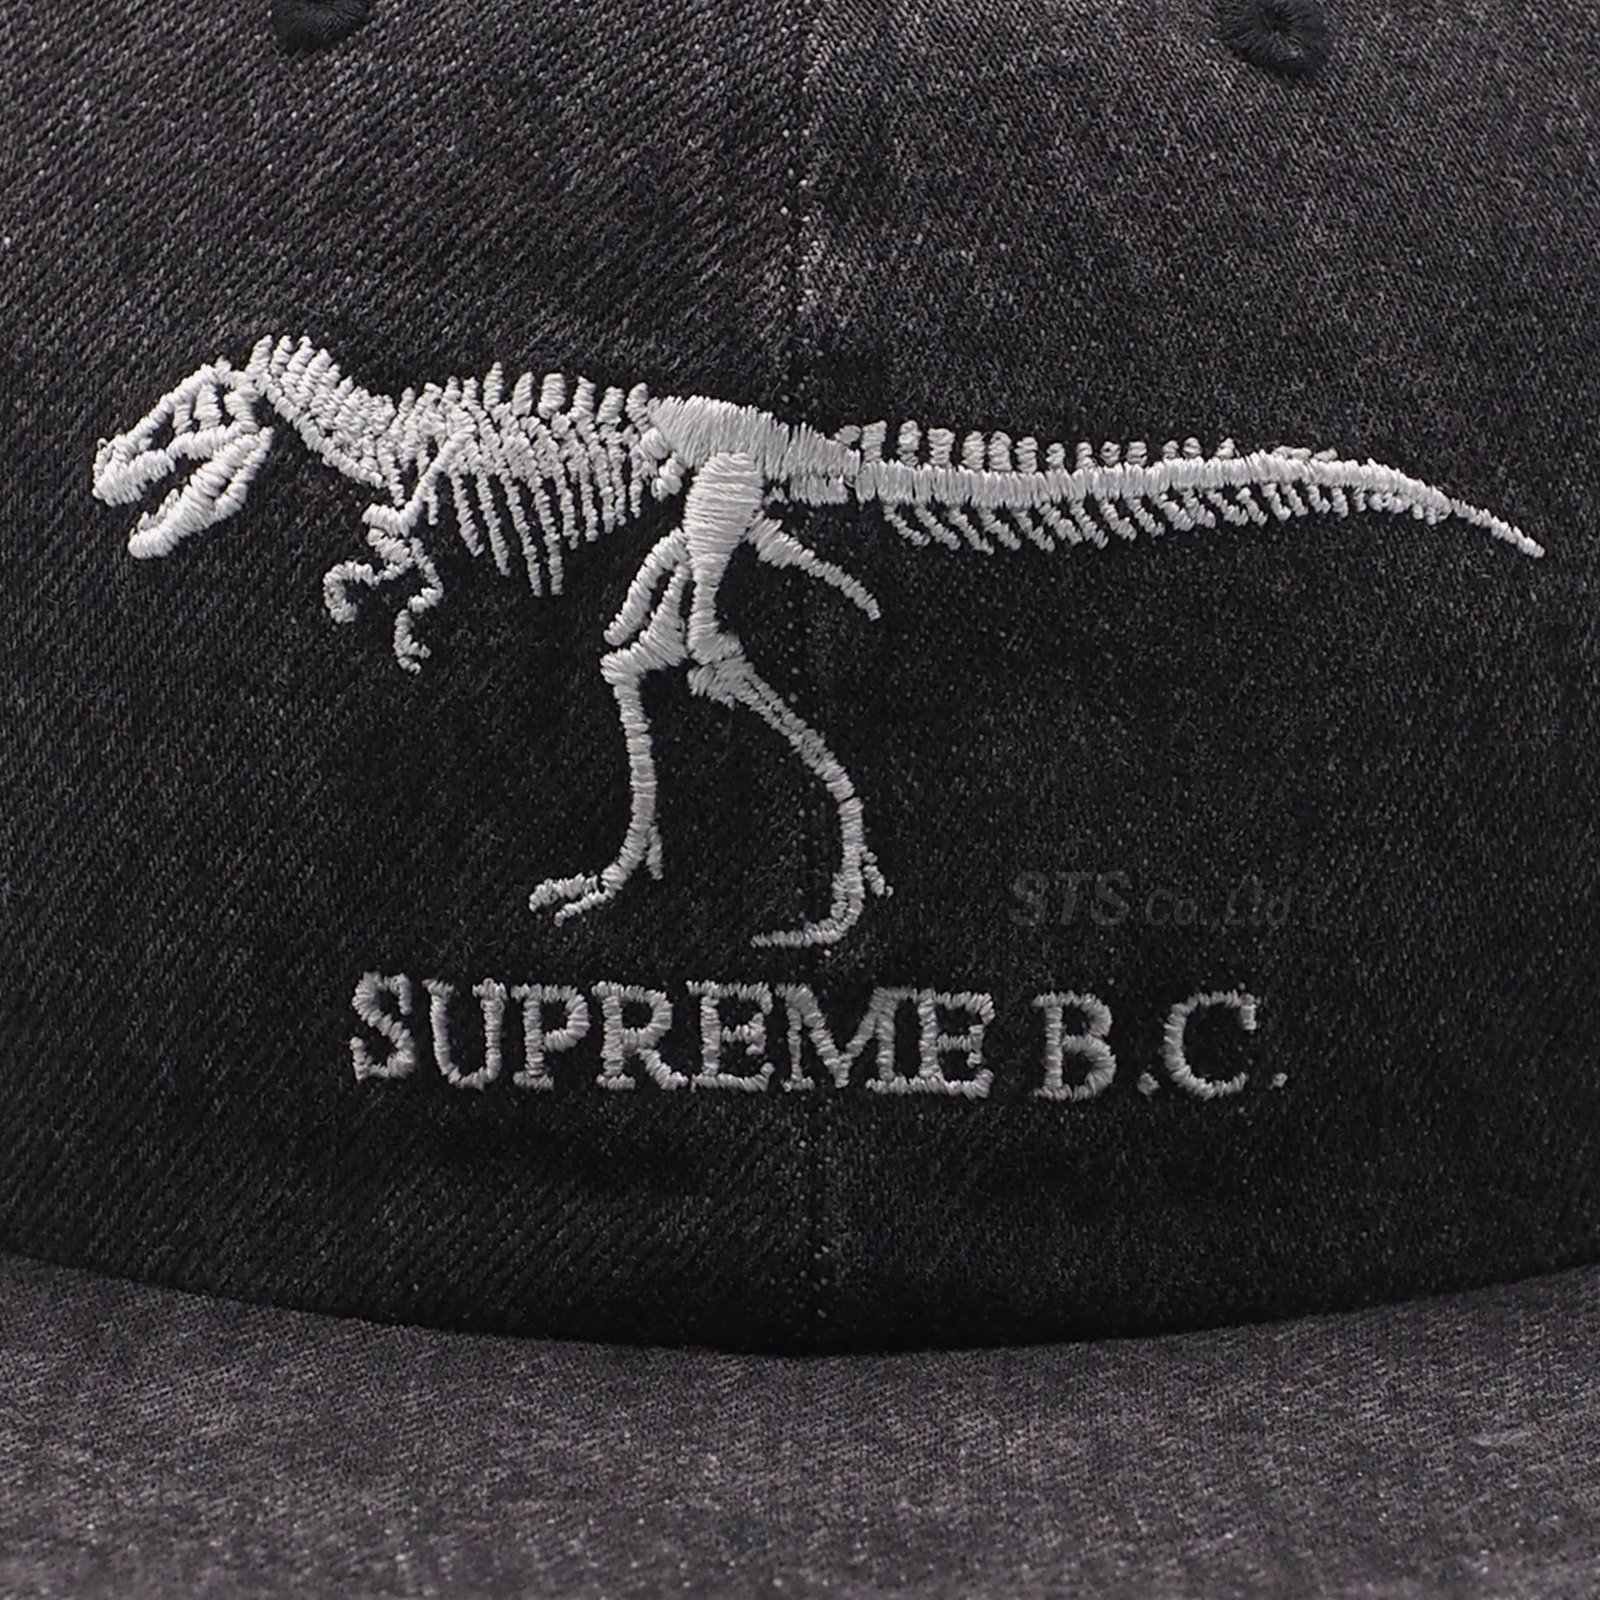 Supreme B.C. 6-Panel Hat Blue 新品未使用